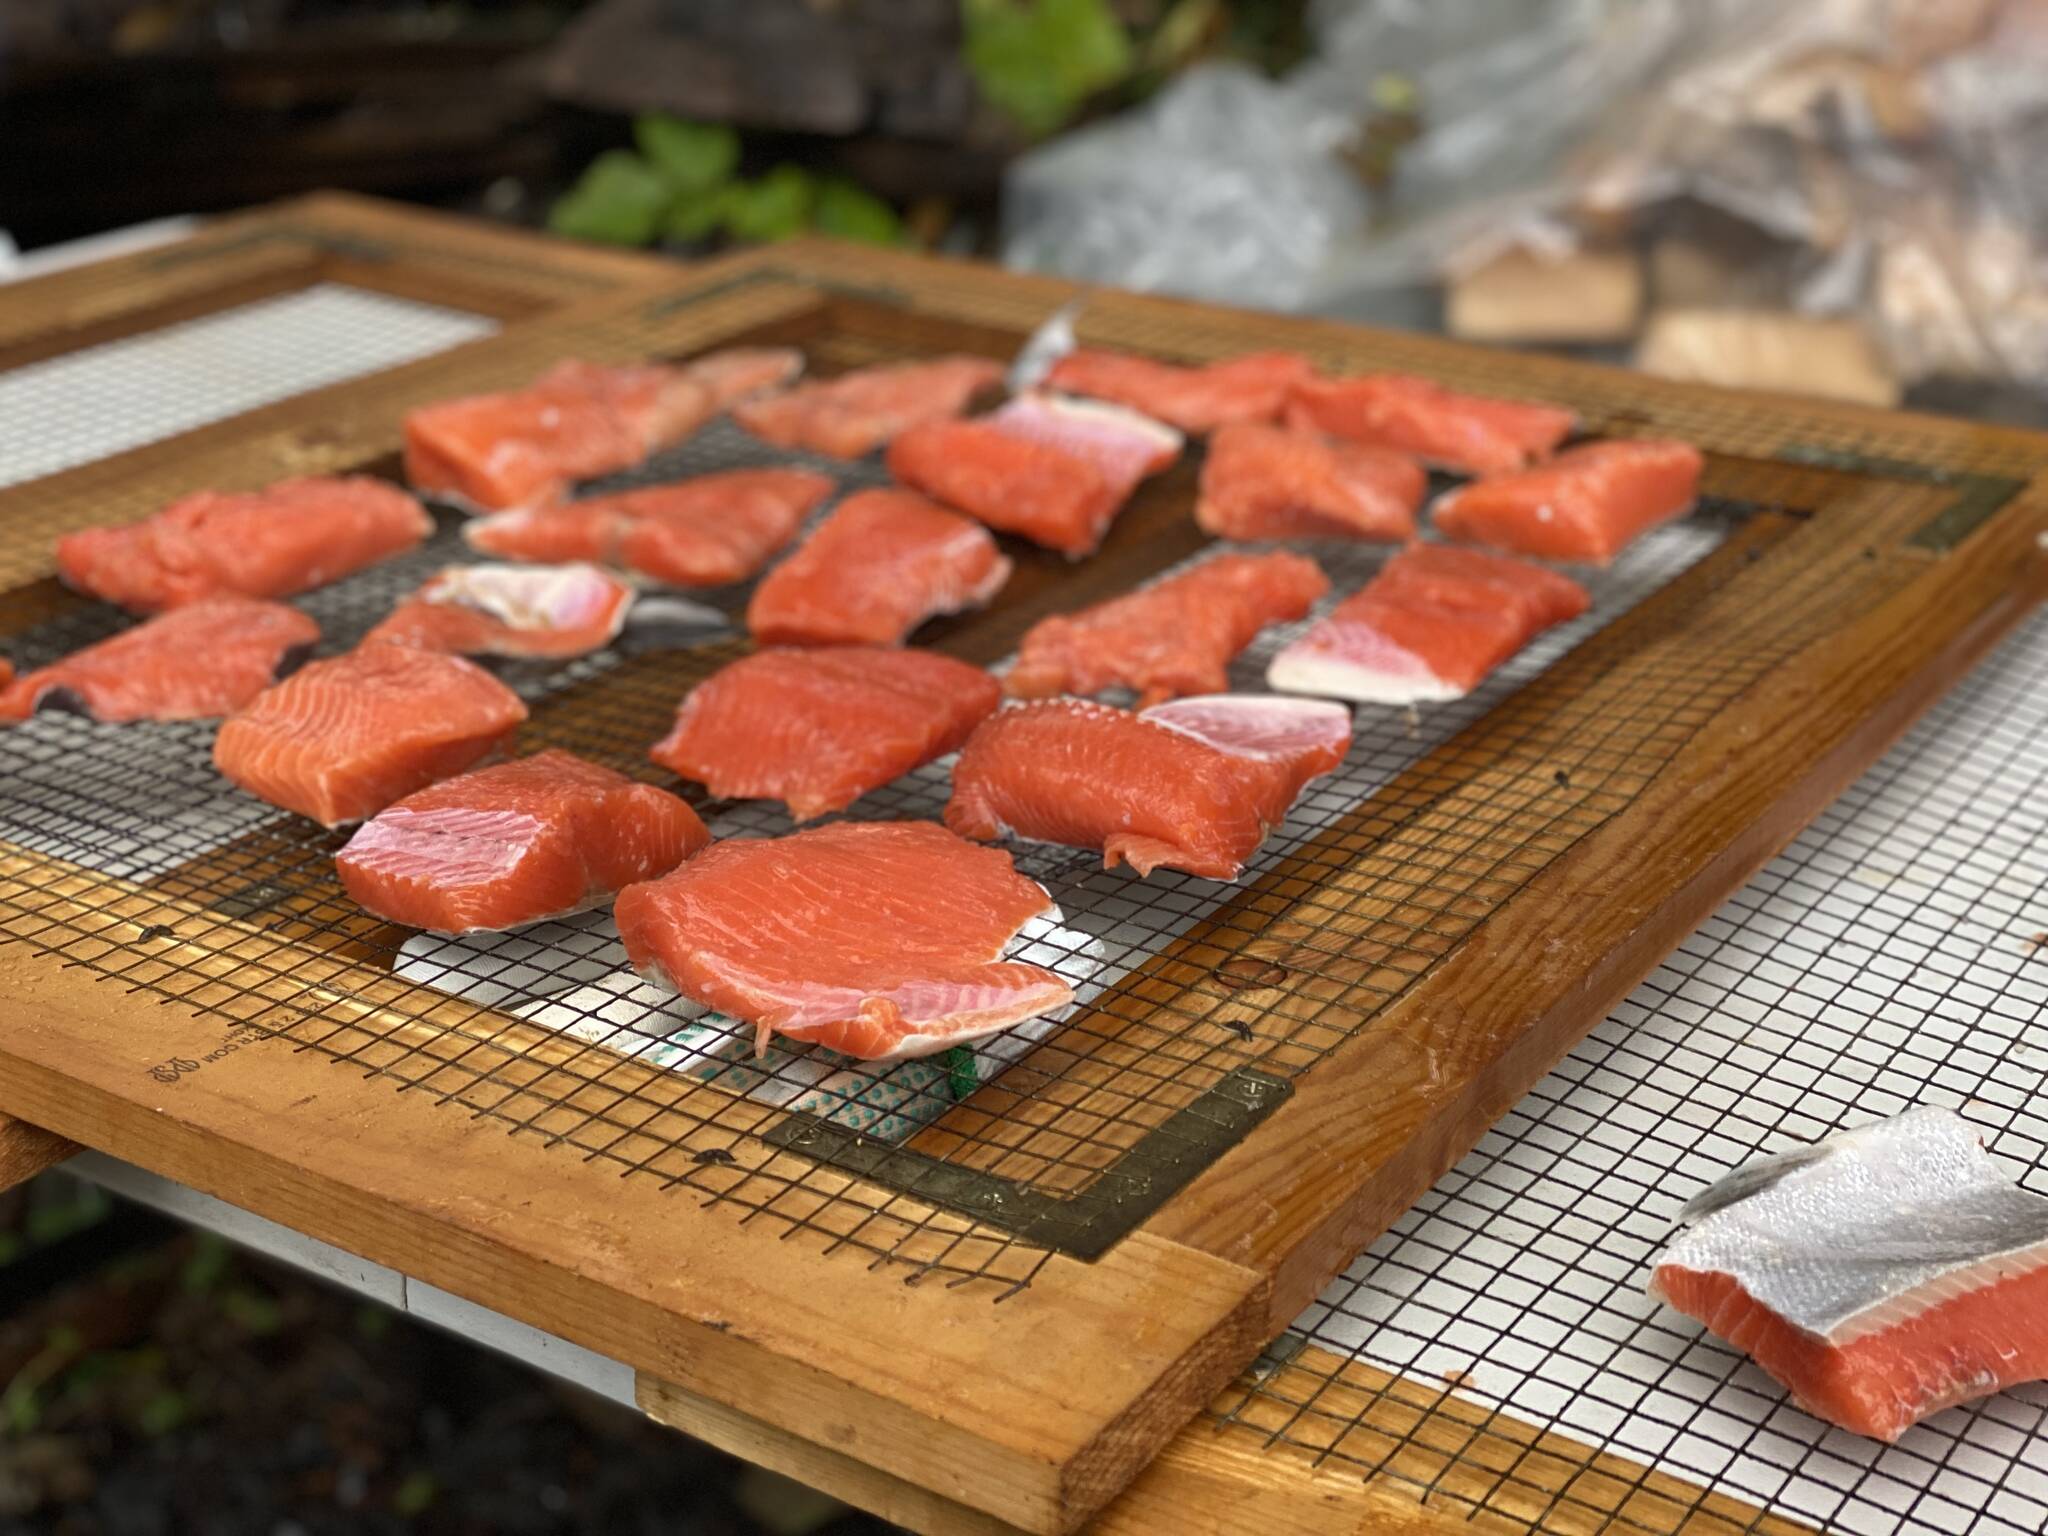 Brined coho salmon on rack ready to go into the smokehouse. (Vivian Faith Prescott / For the Capital City Weekly)